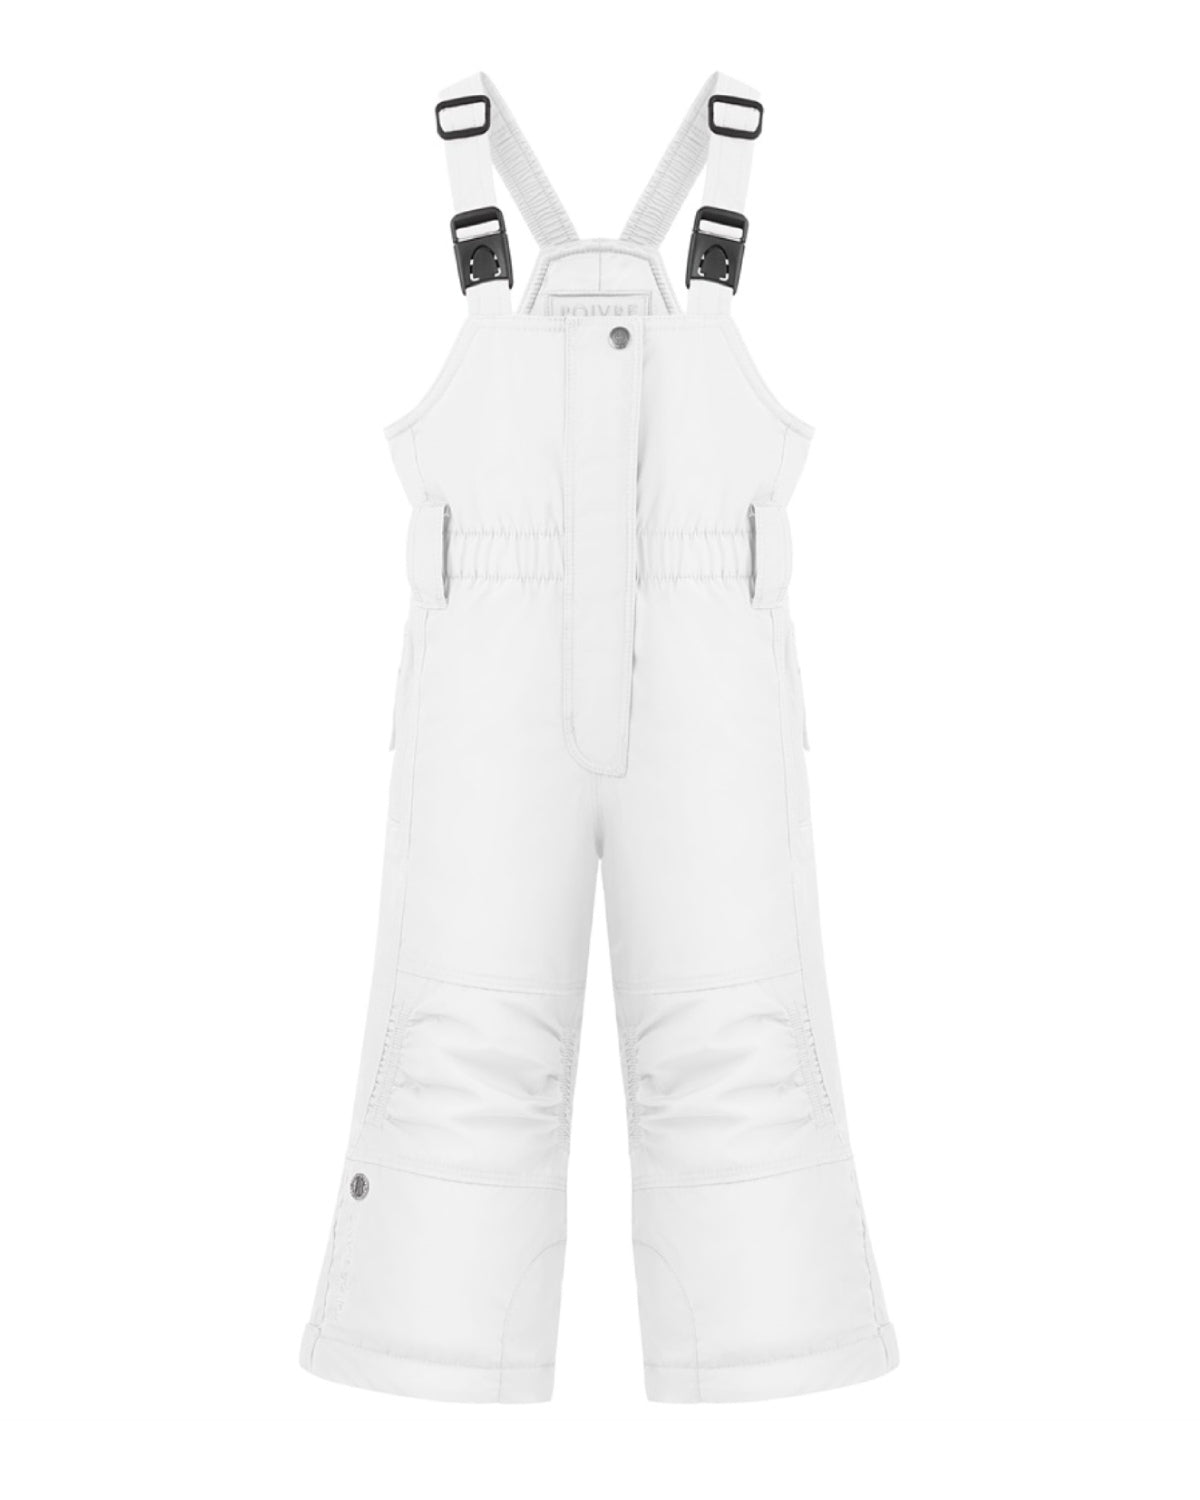 Poivre Blanc Girls' Ski Bib Pant in White (Ages 4 - 6)